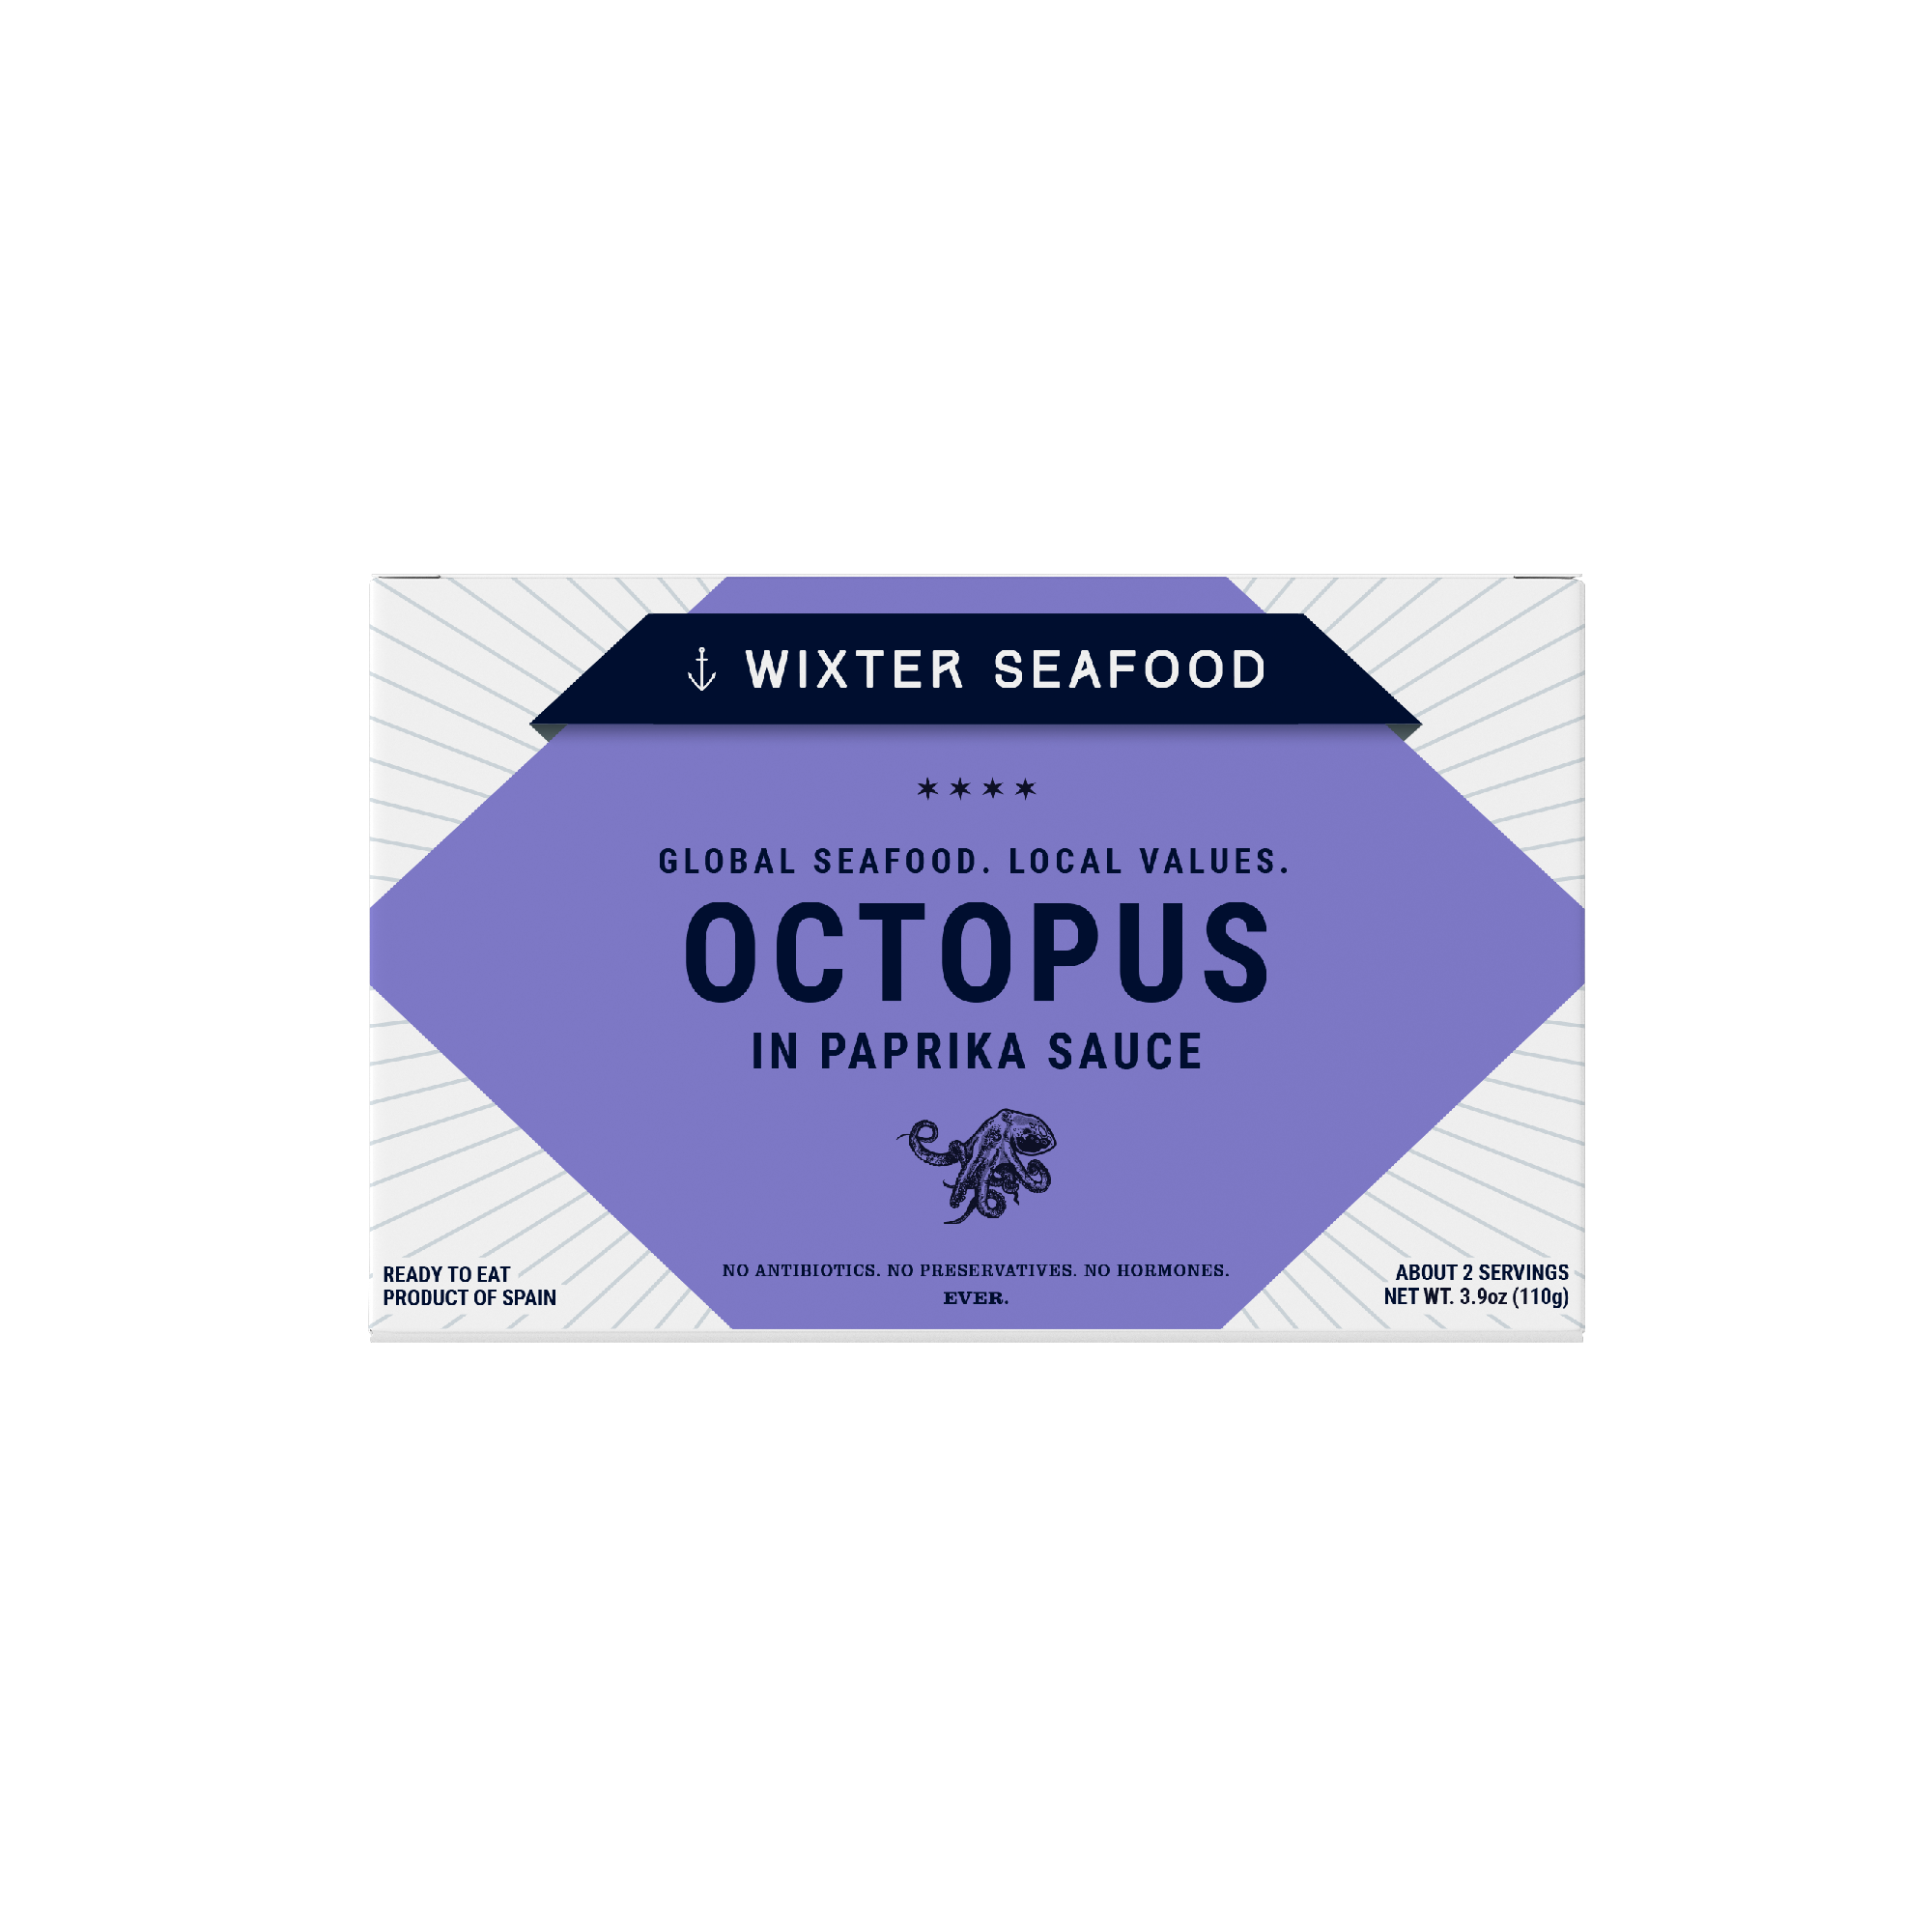 Octopus in Paprika Sauce